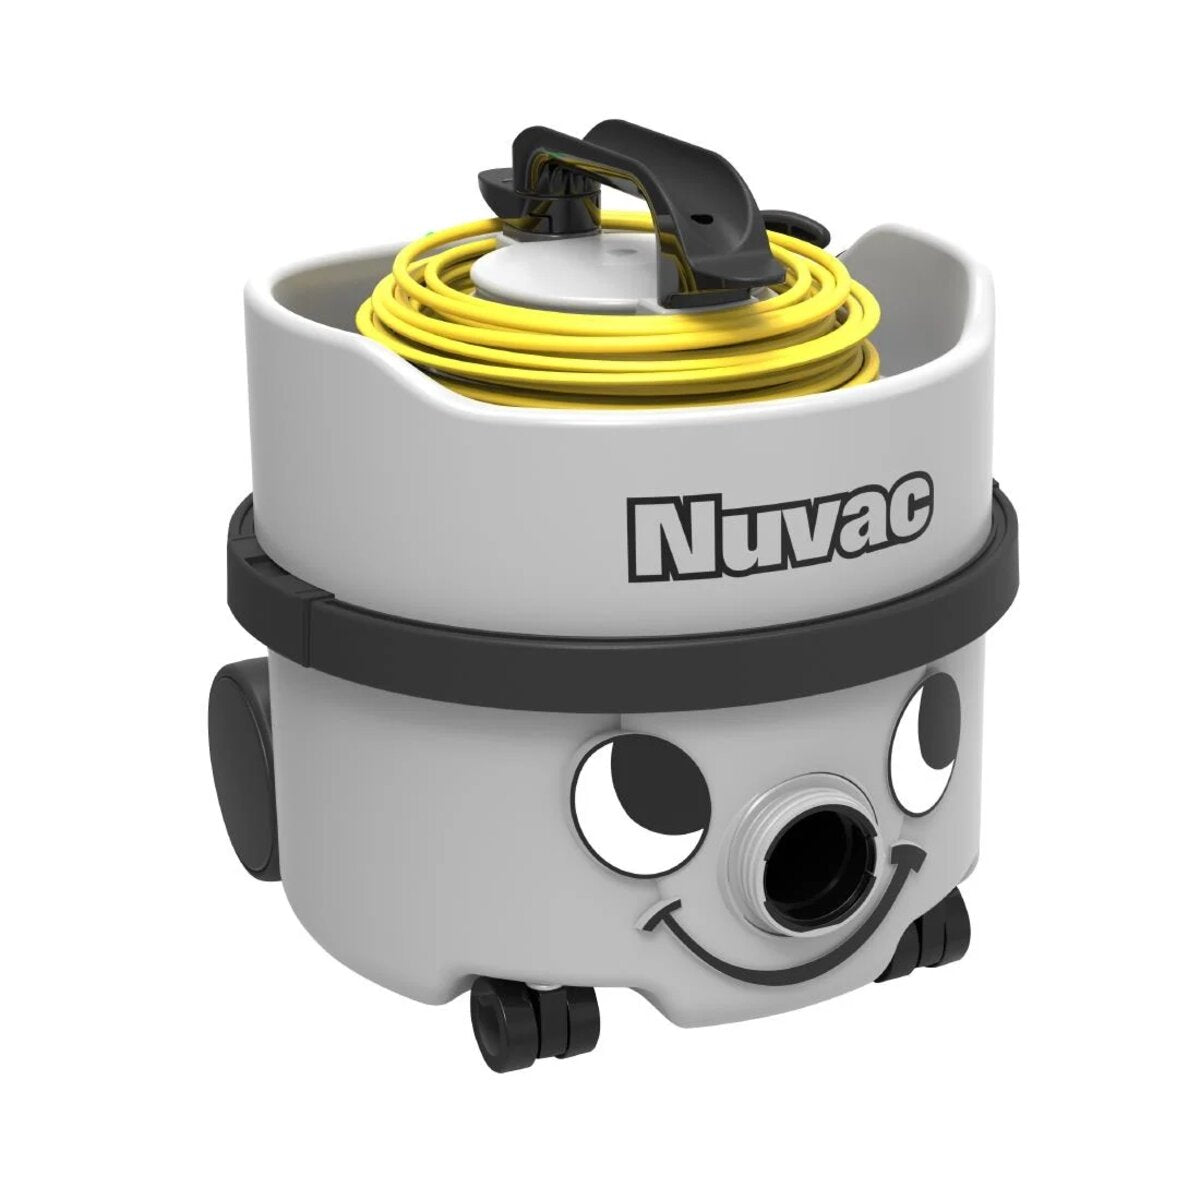 Numatic VNP180-11 230V Commercial Dry Vacuum Cleaner 8L